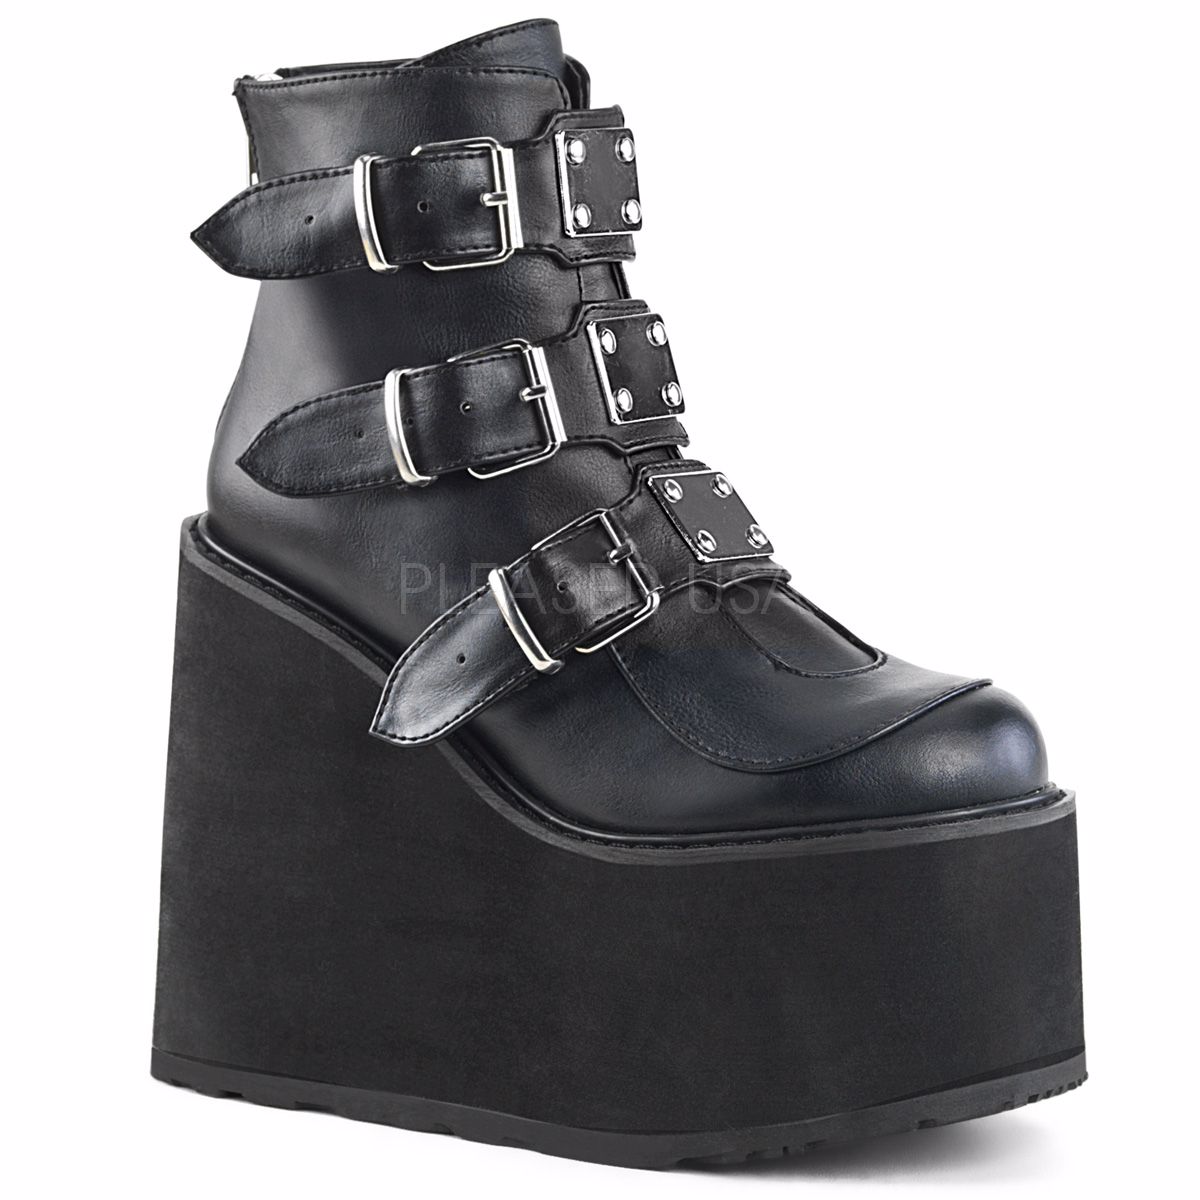 Sky High Shoes - Premium Alternative Footwear Retailer UK. Demonia Swing-105 Ankle Boots Black 